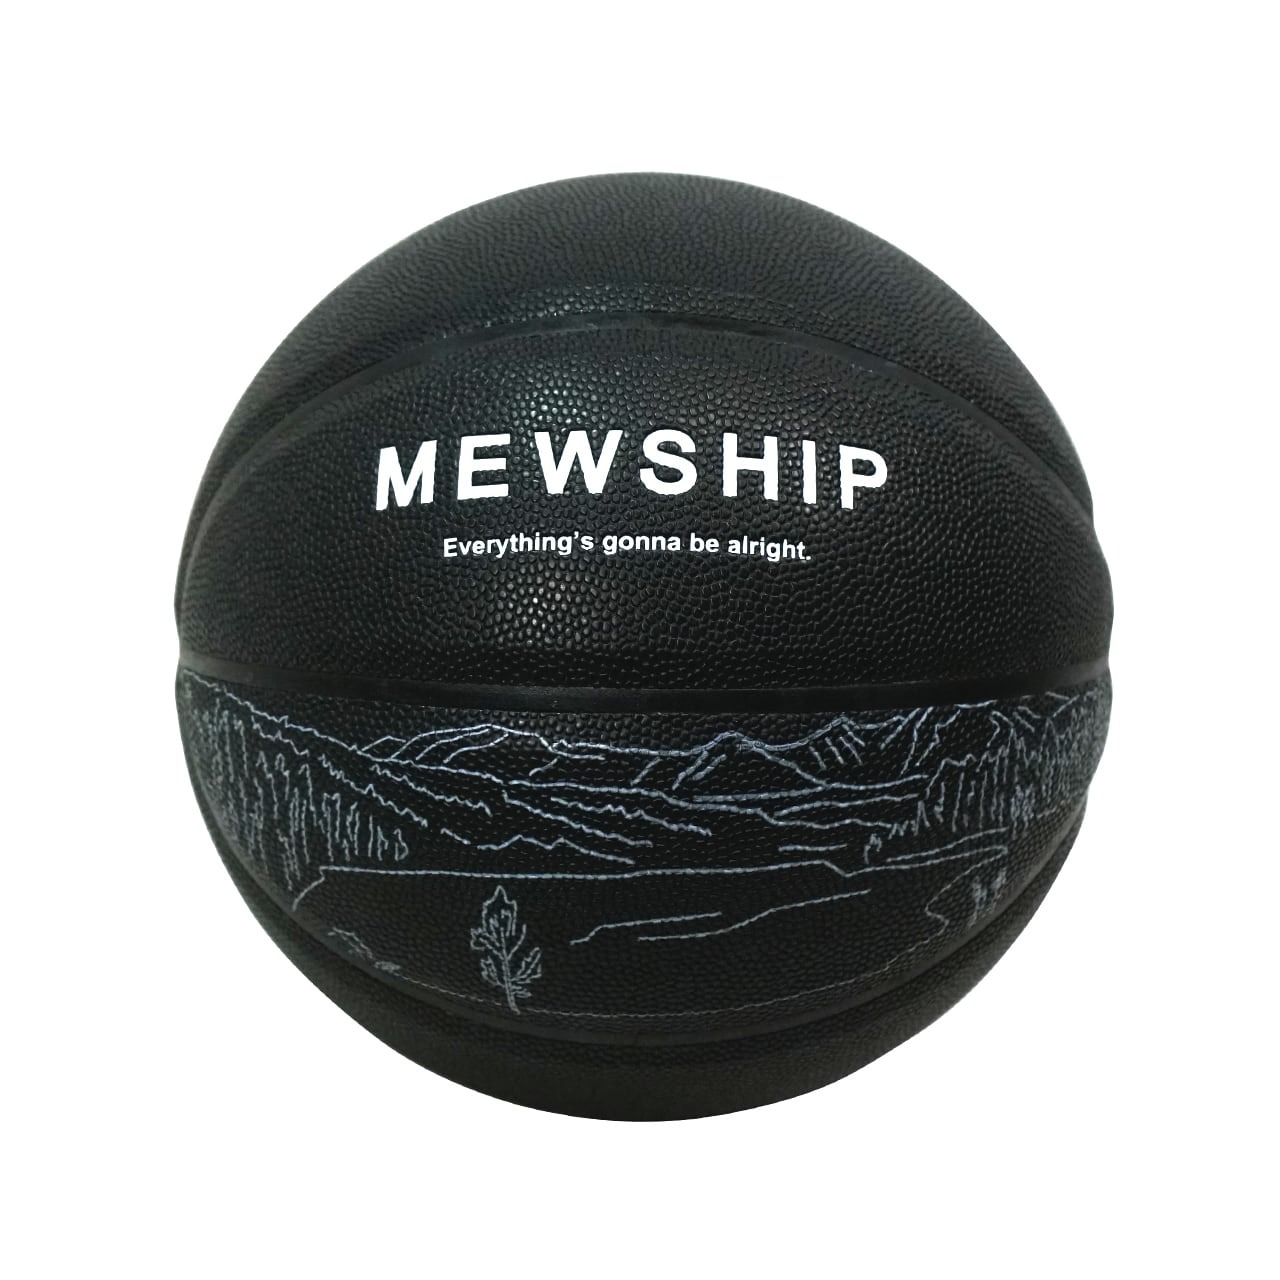 Mewship oXPbg{[yLake of zonez7 Black~White